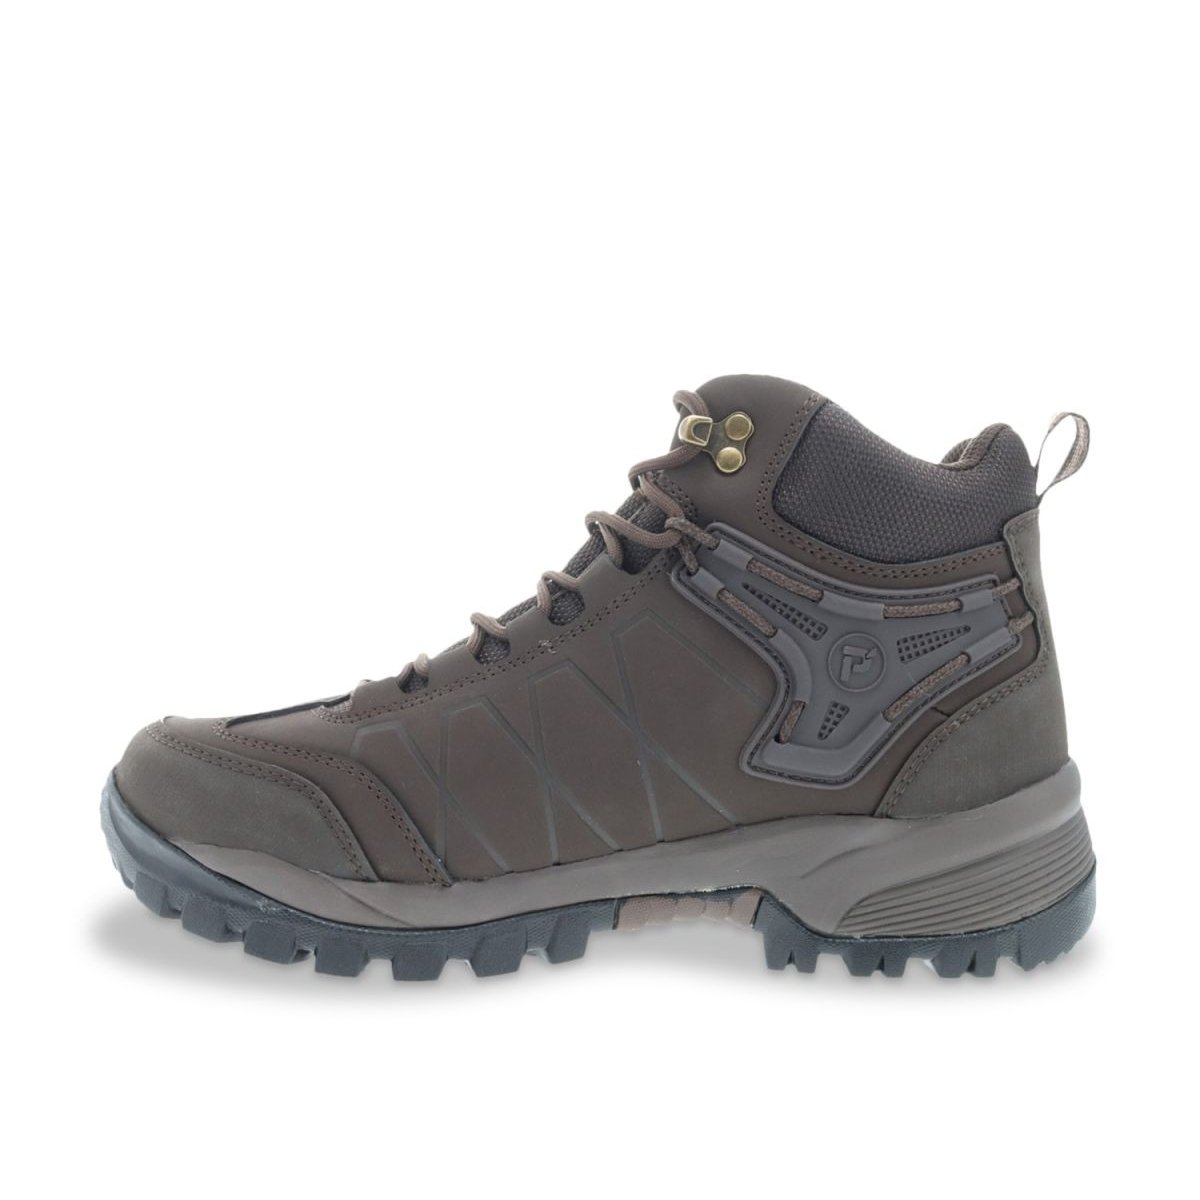 Propet Men's Ridge Walker Force Hiking Boots Dark Brown - MBA052LBR BROWN - BROWN, 9 XX-Wide